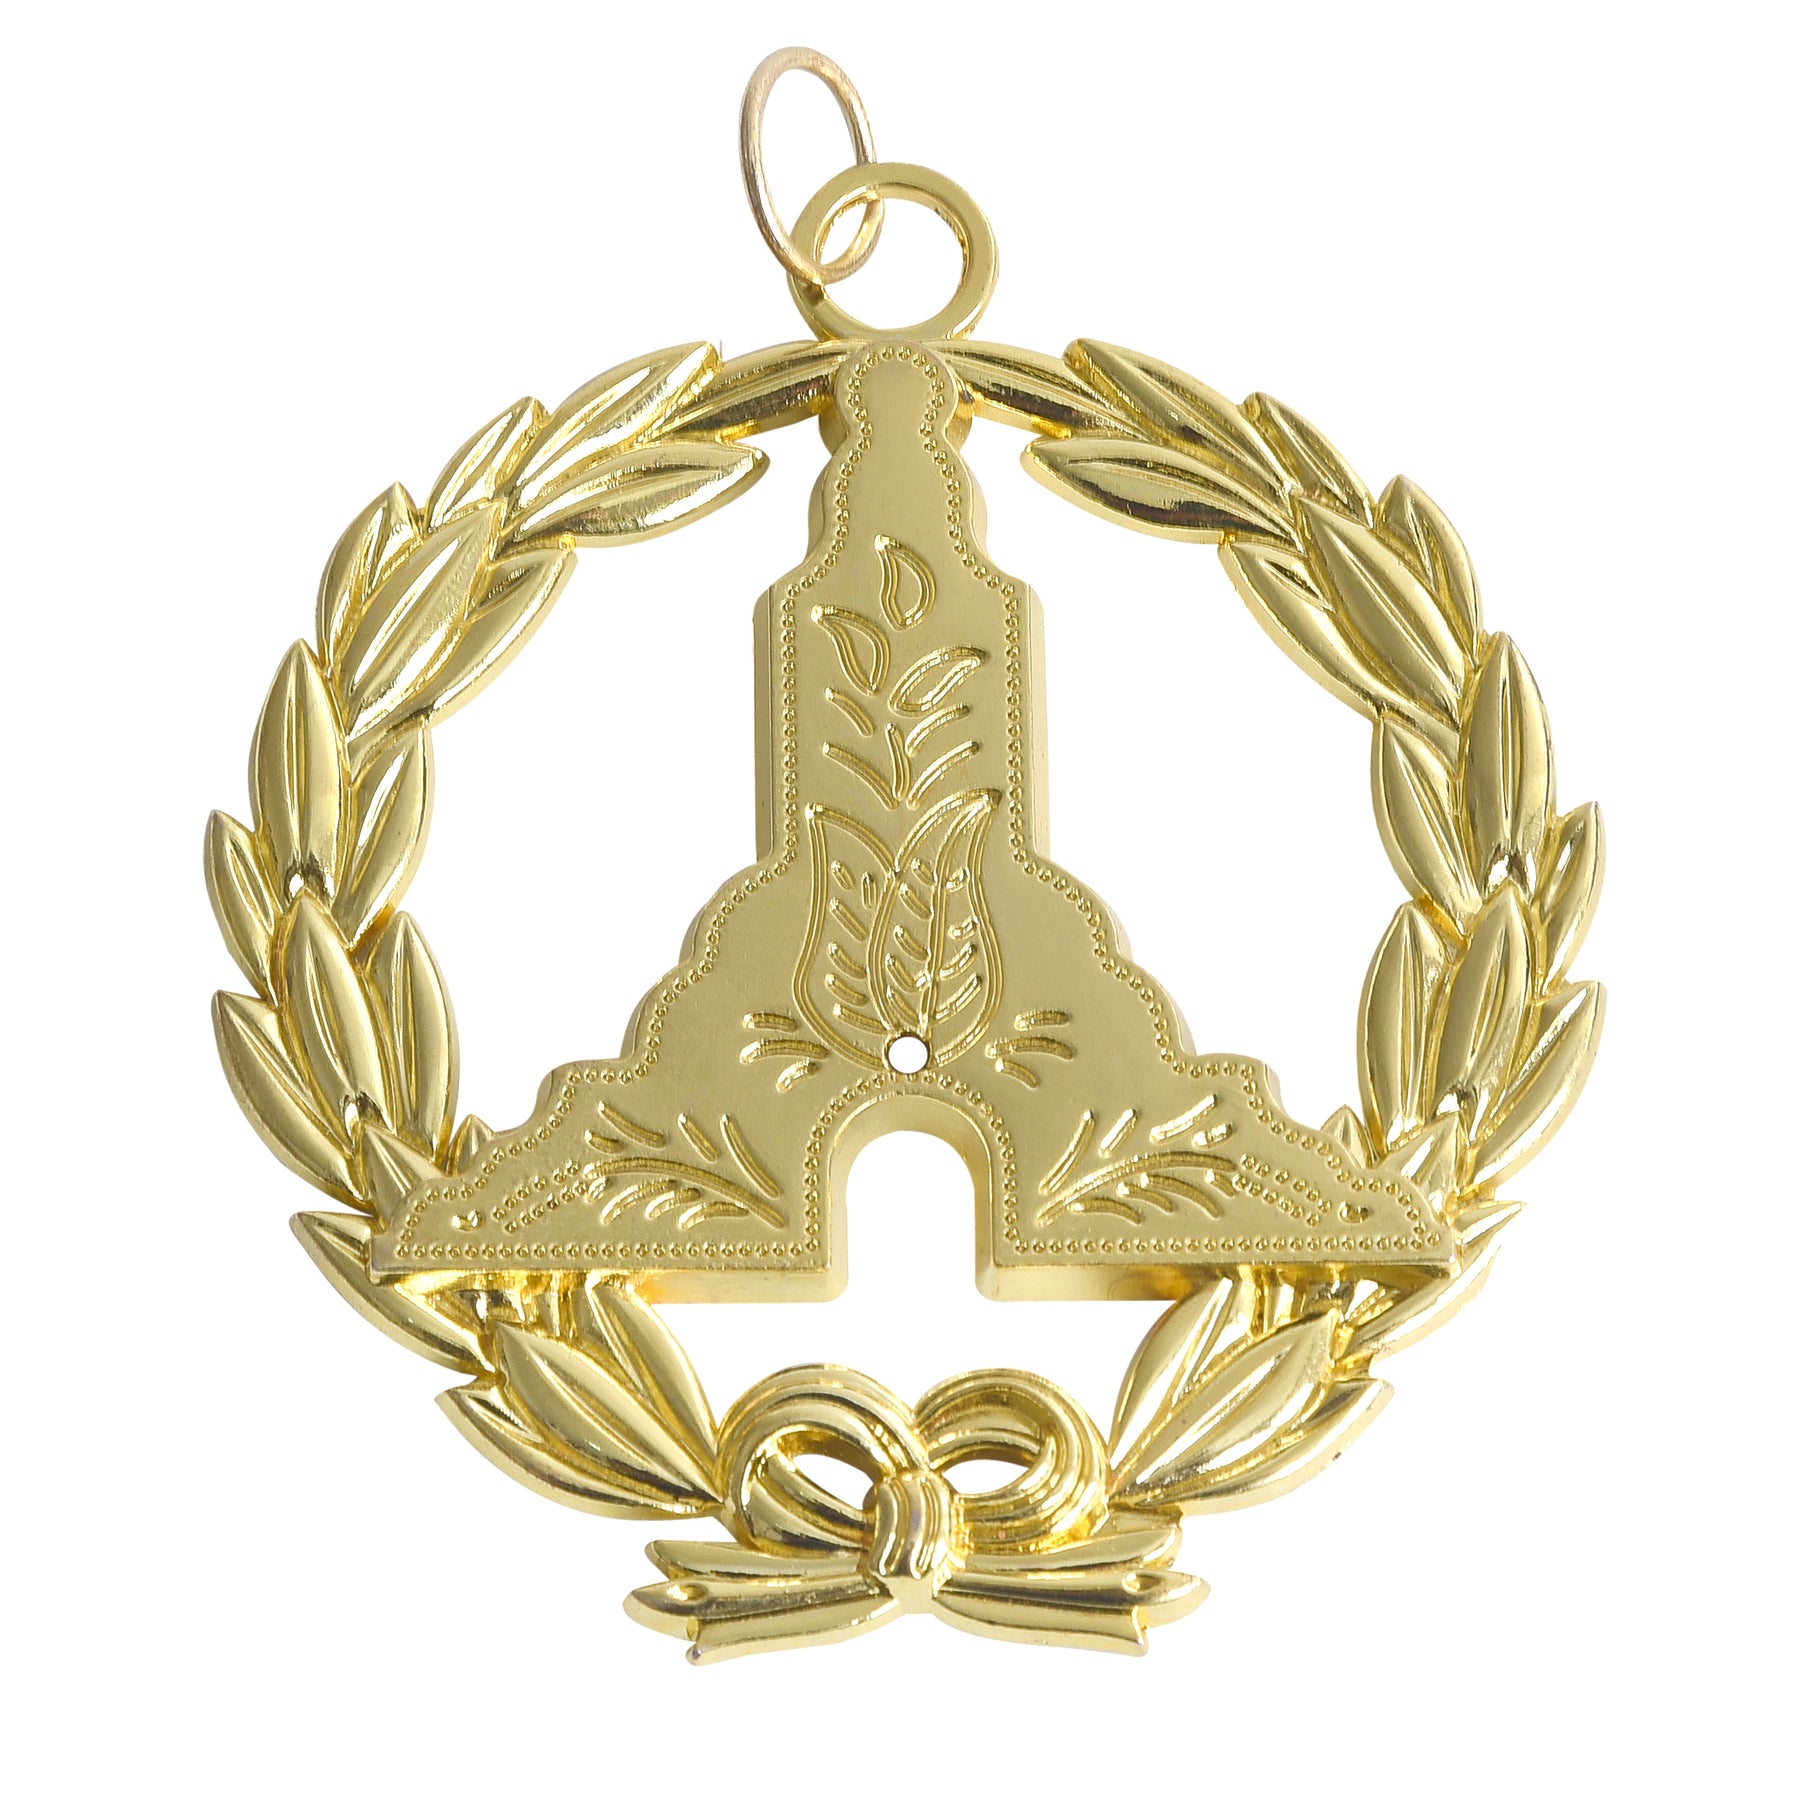 Senior Grand Warden Blue Lodge Officer Collar Jewel - Gold Metal - Bricks Masons